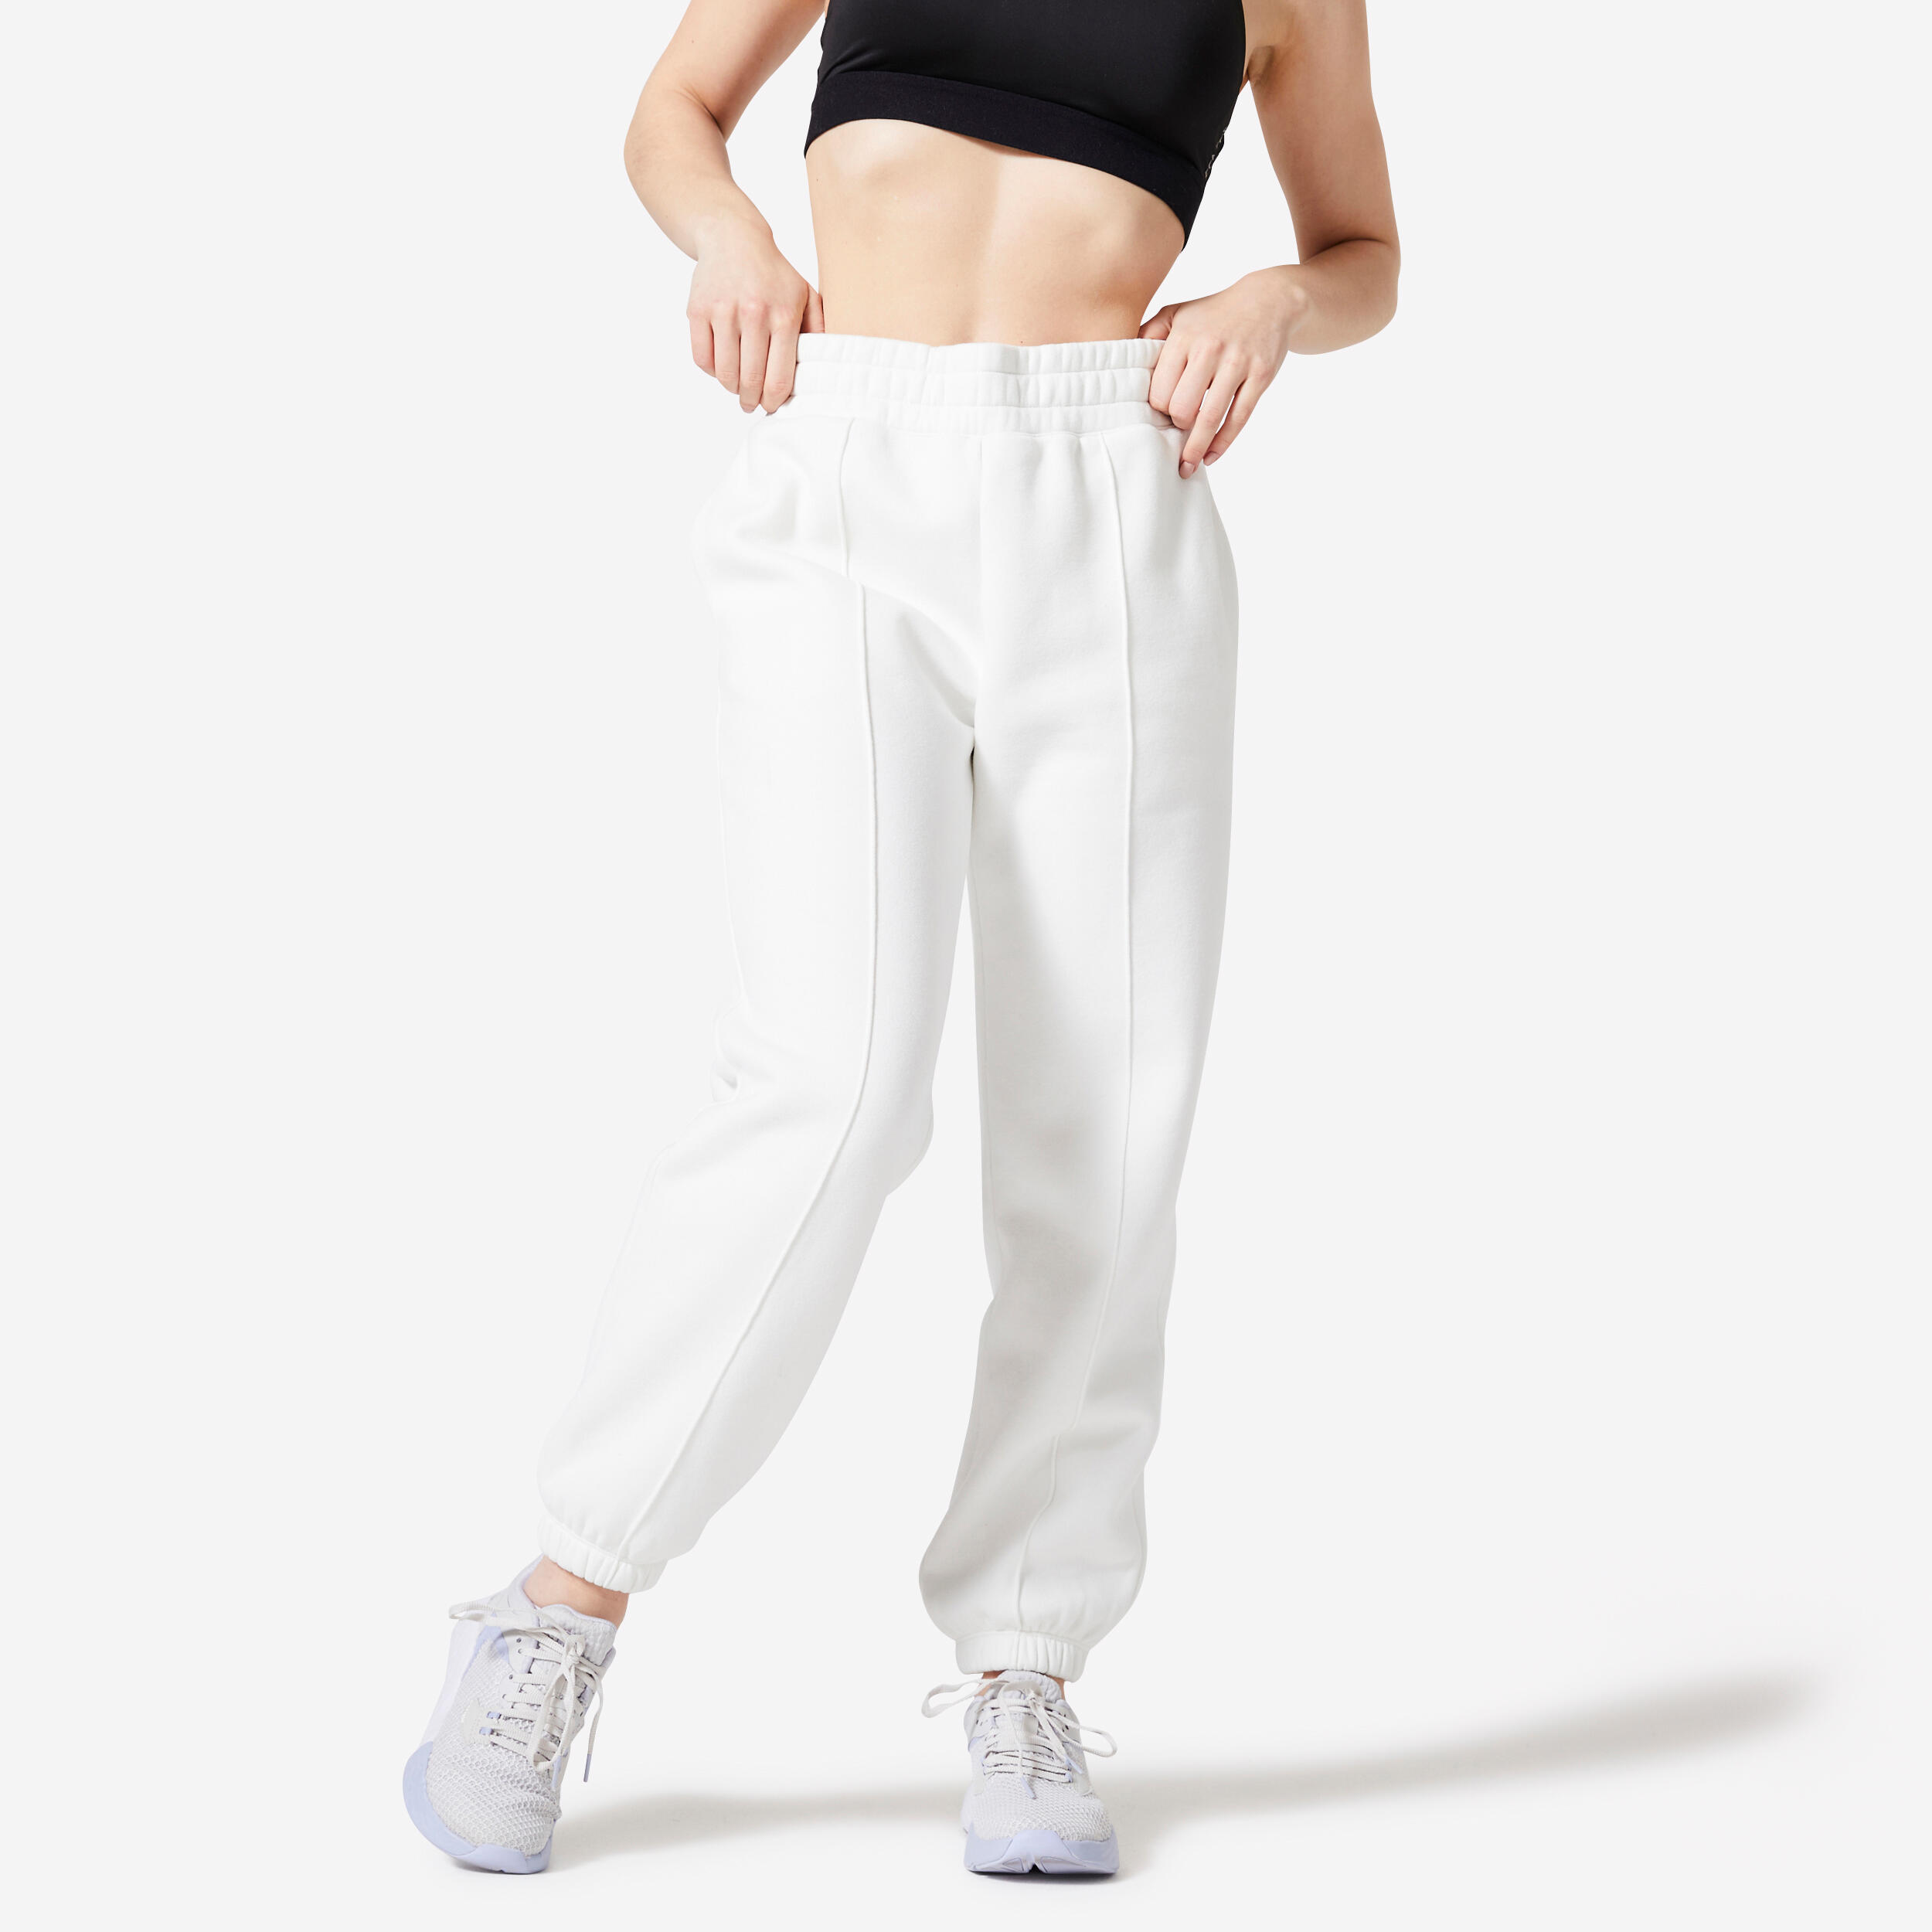 Pantalon de sport femme – 500 - Blanc cassé - Domyos - Décathlon